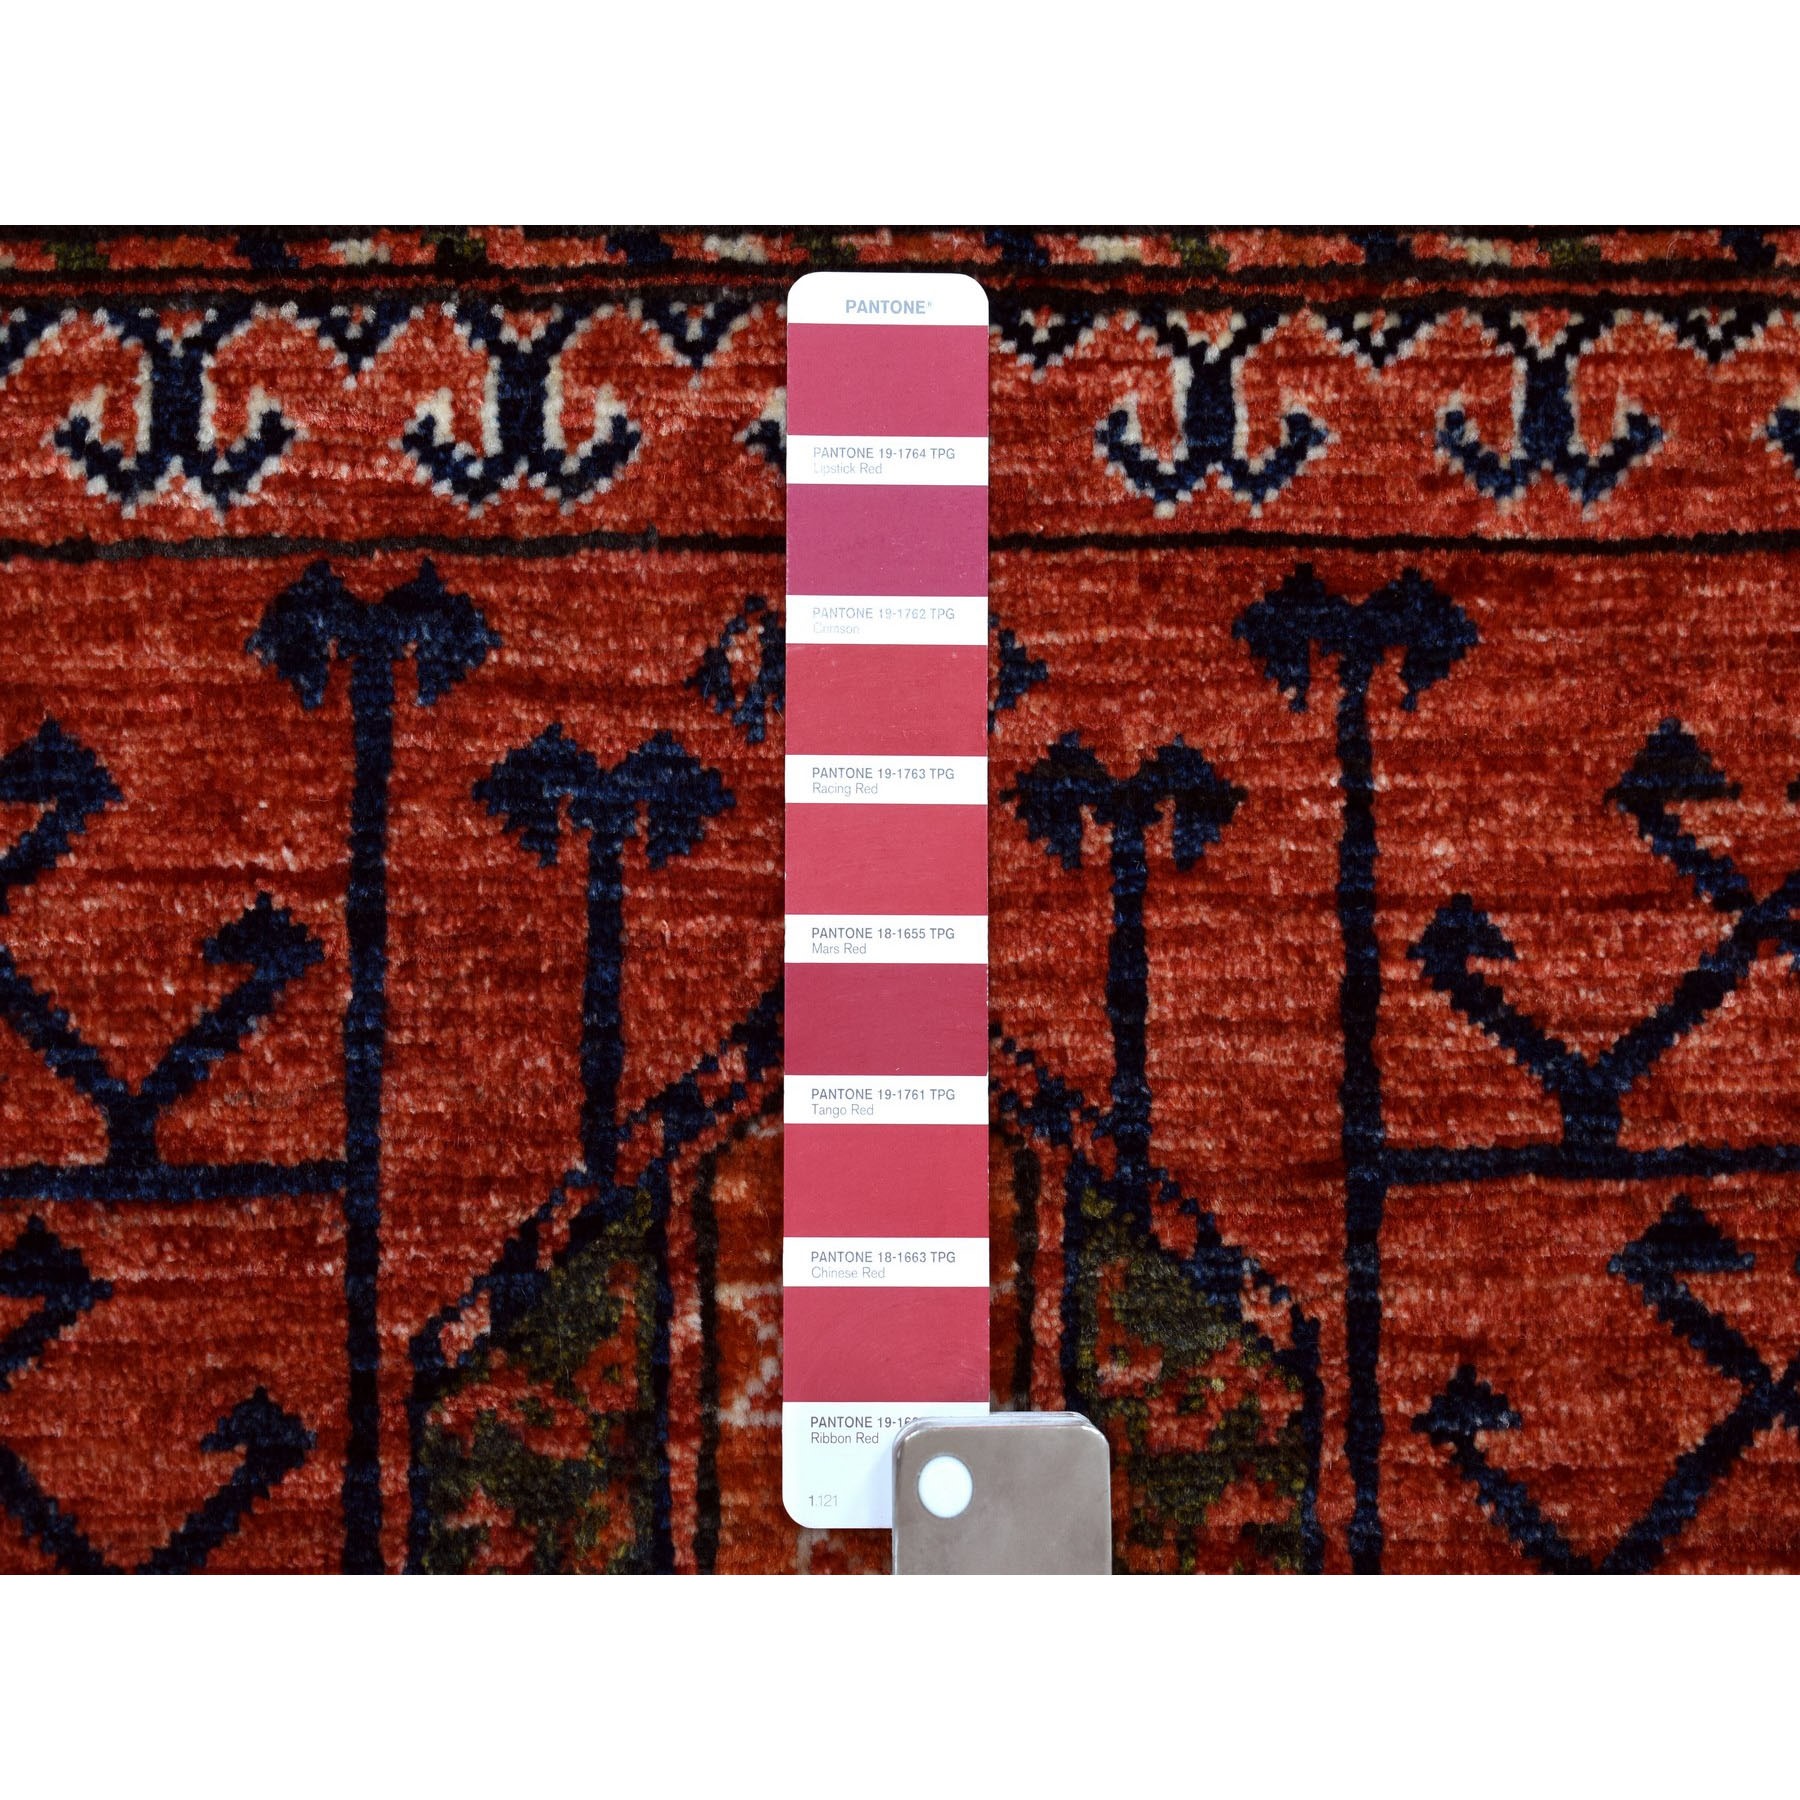 4-x5-9  Red Afghan Turkoman Ersari Hutchlu Design Pure Wool Hand Knotted Oriental Rug 